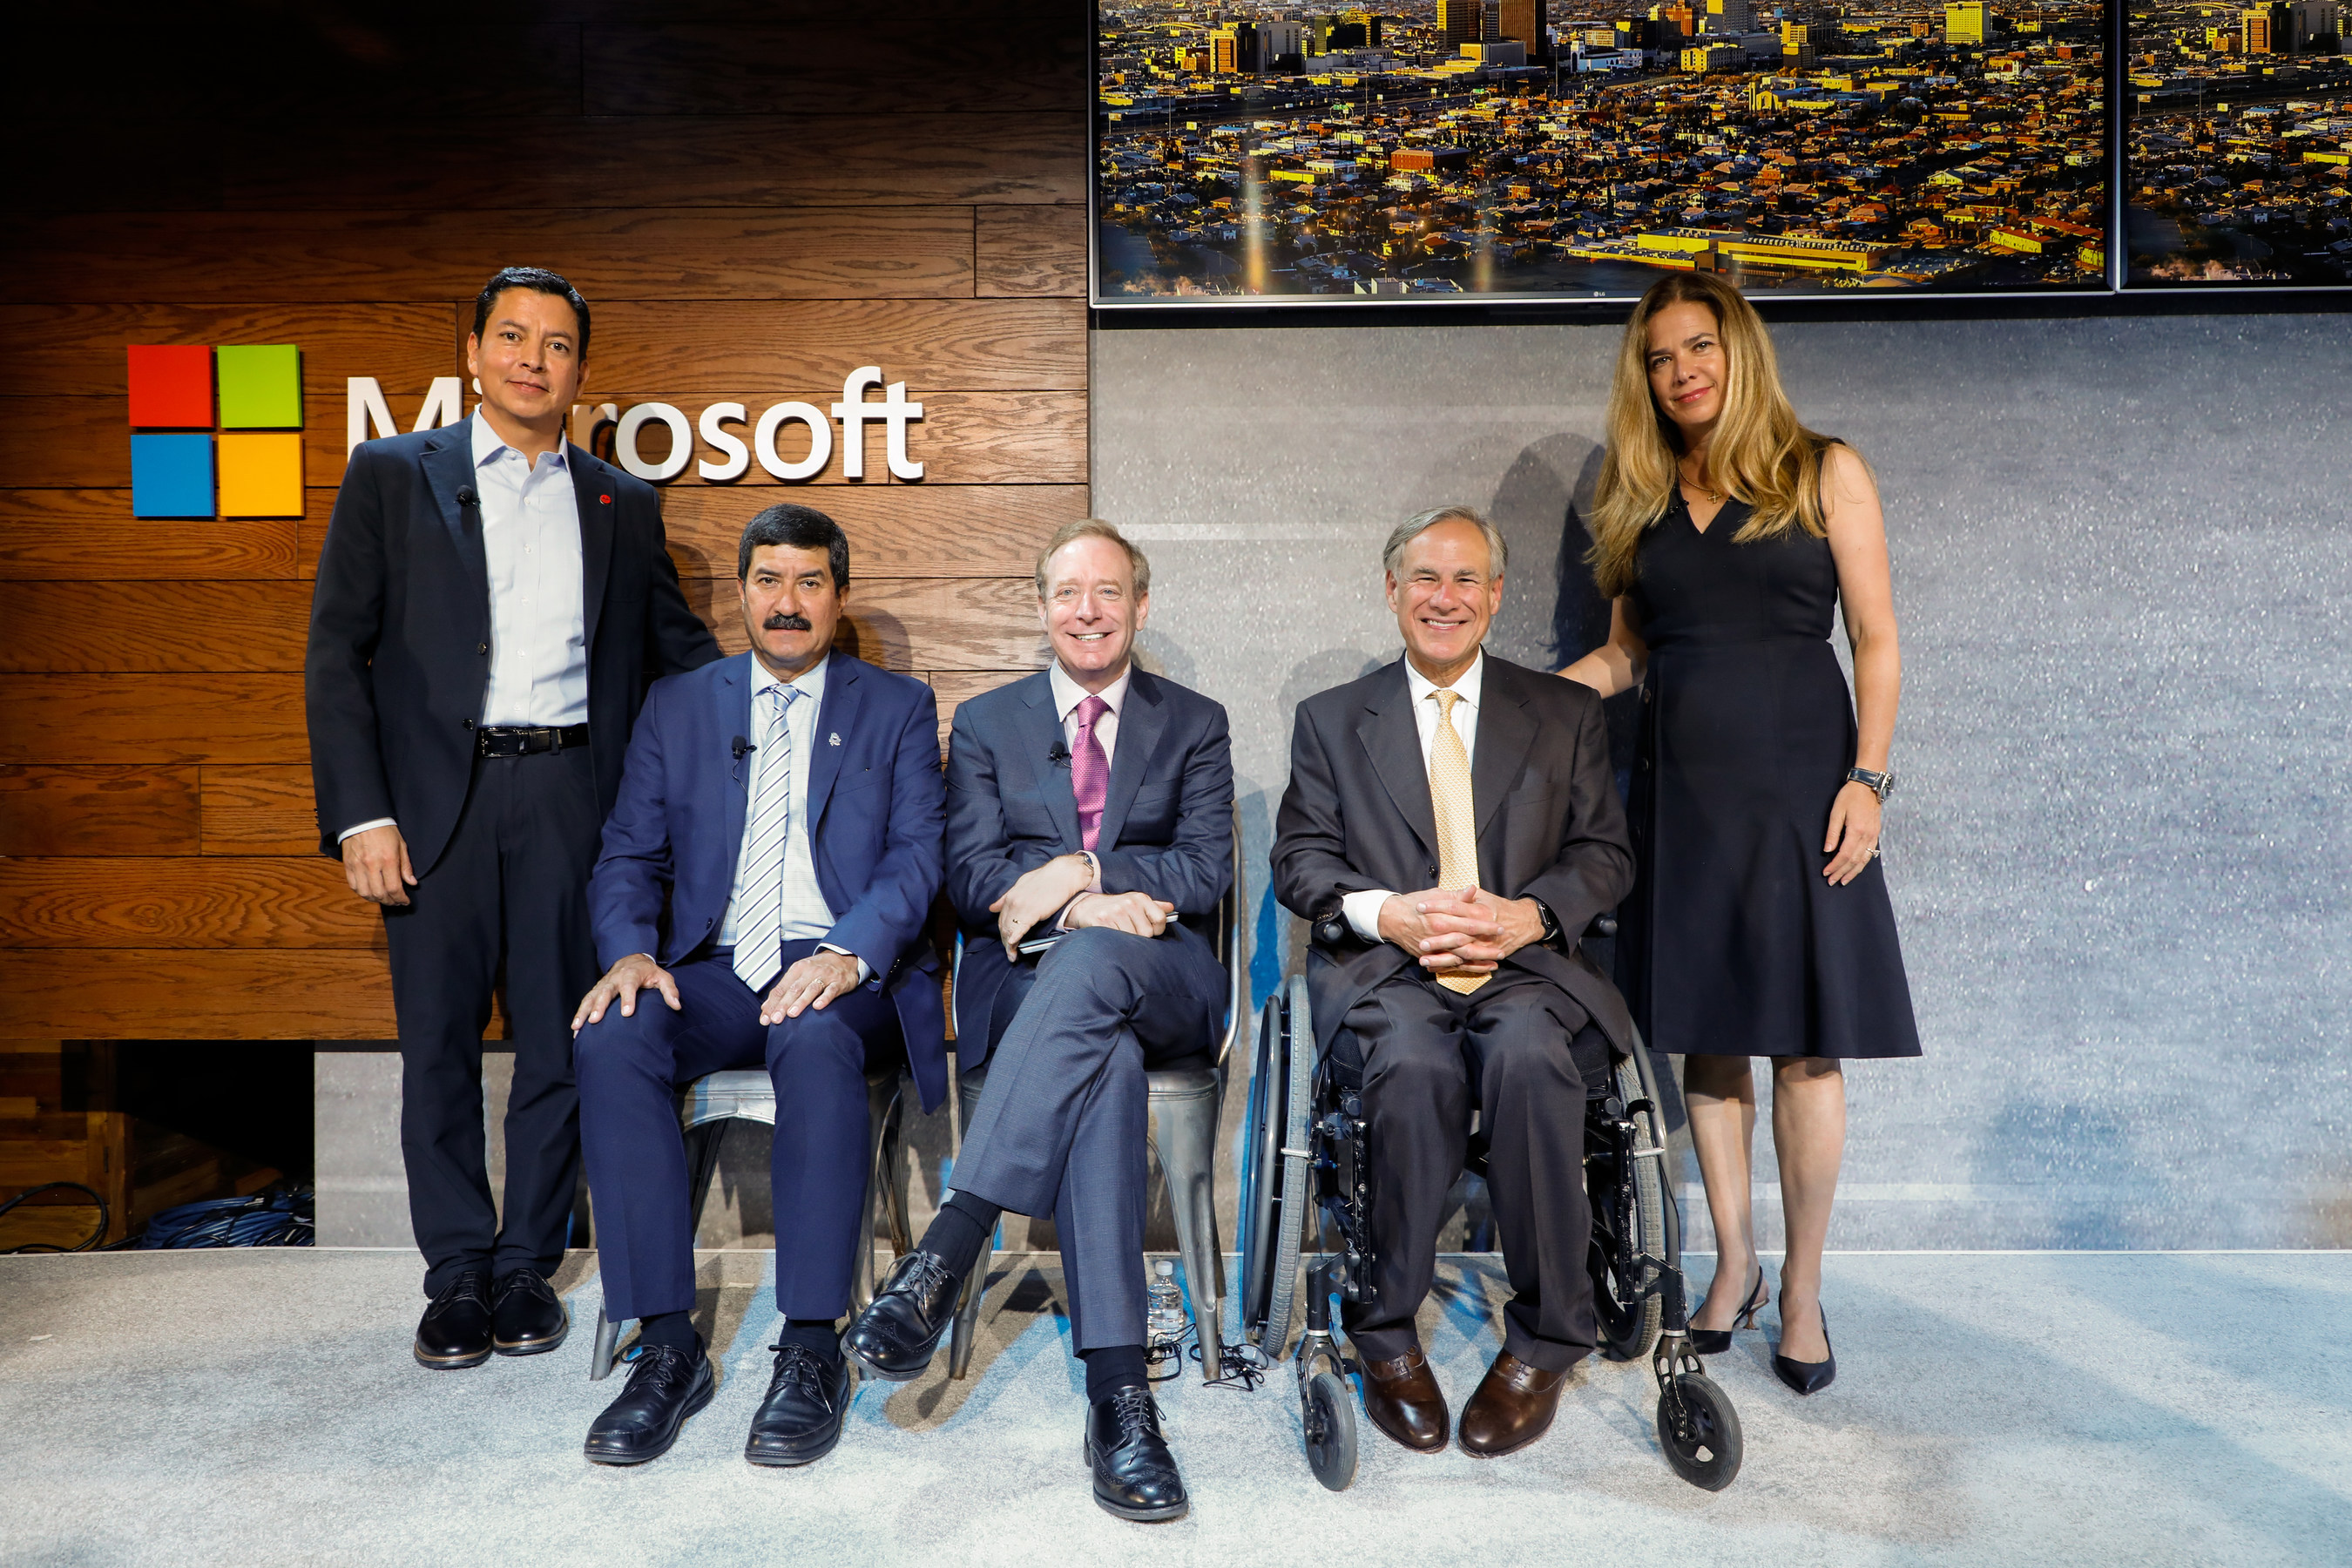 Microsoft will invest US$$1.5 million in El Paso-Juarez region